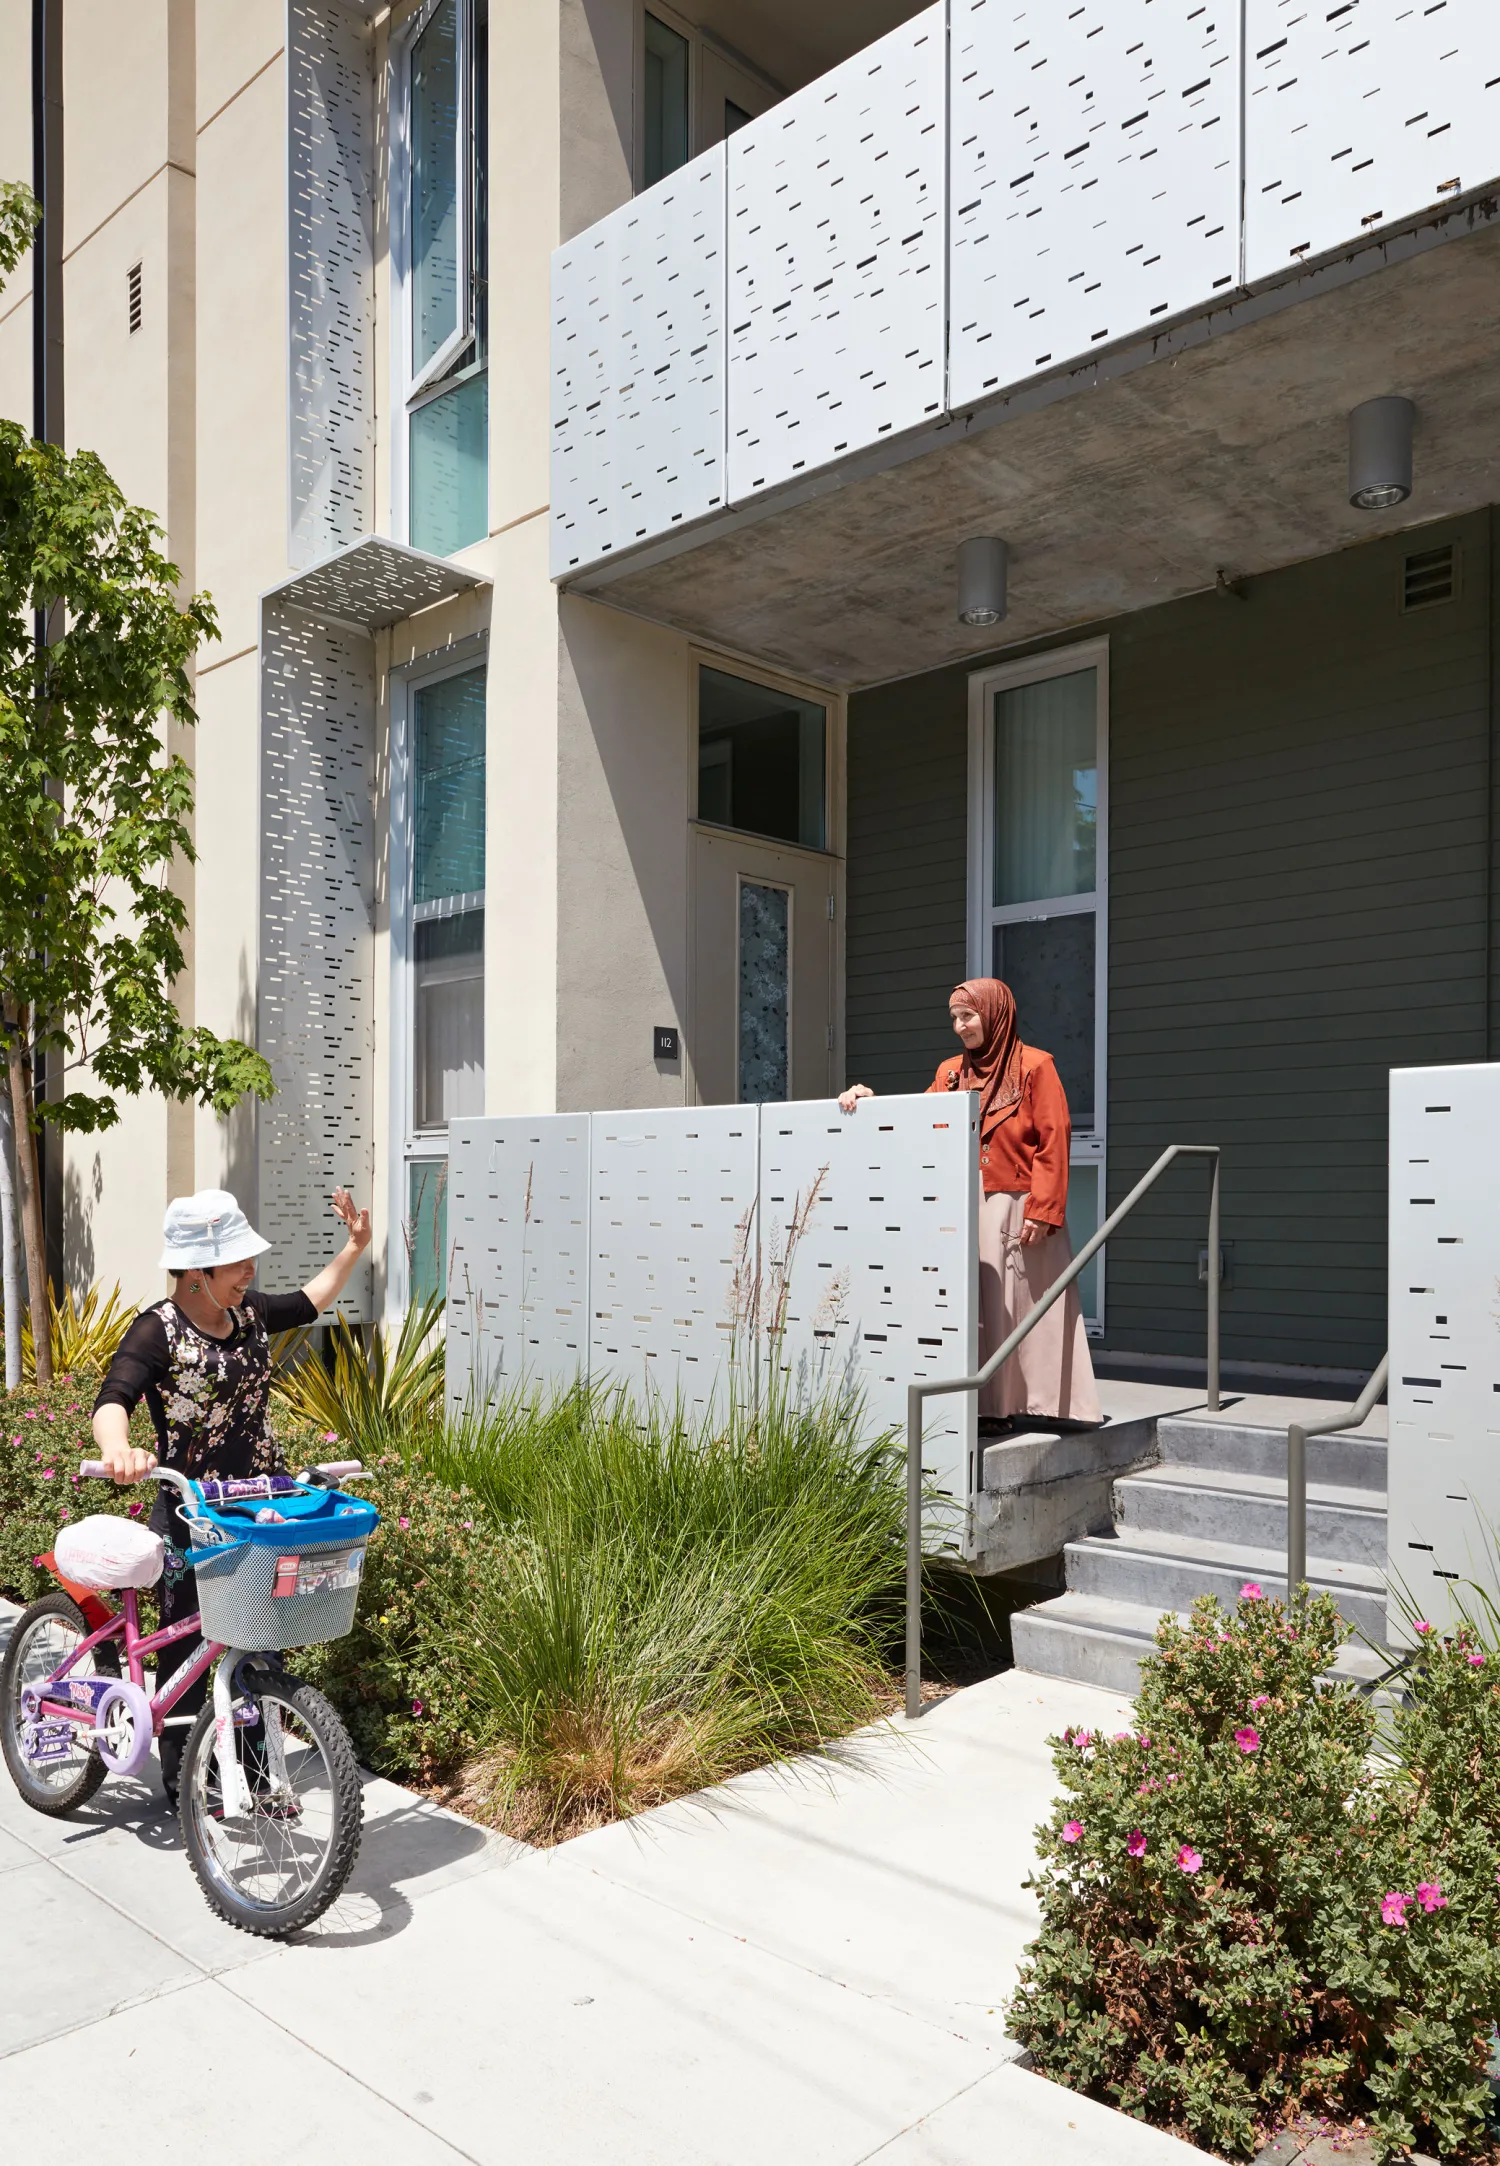 Residential stoop at Lakeside Senior Housing in Oakland, Ca.